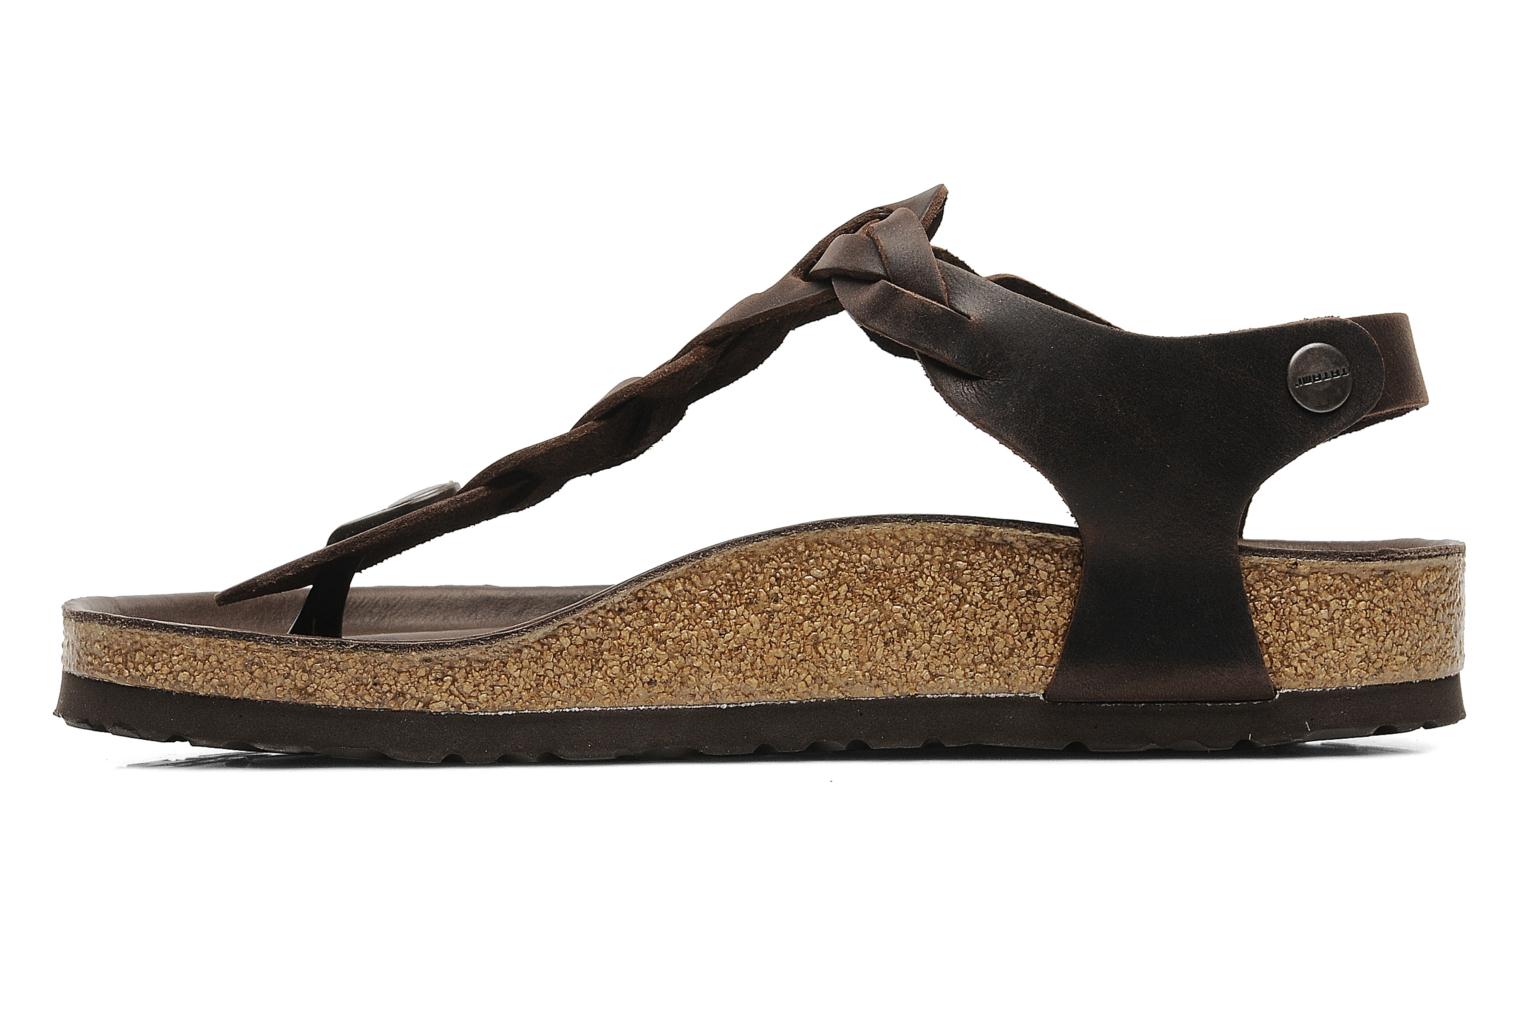 Tatami By Birkenstock Kairo Cuir W Sandals in Brown at Sarenza.co.uk ...